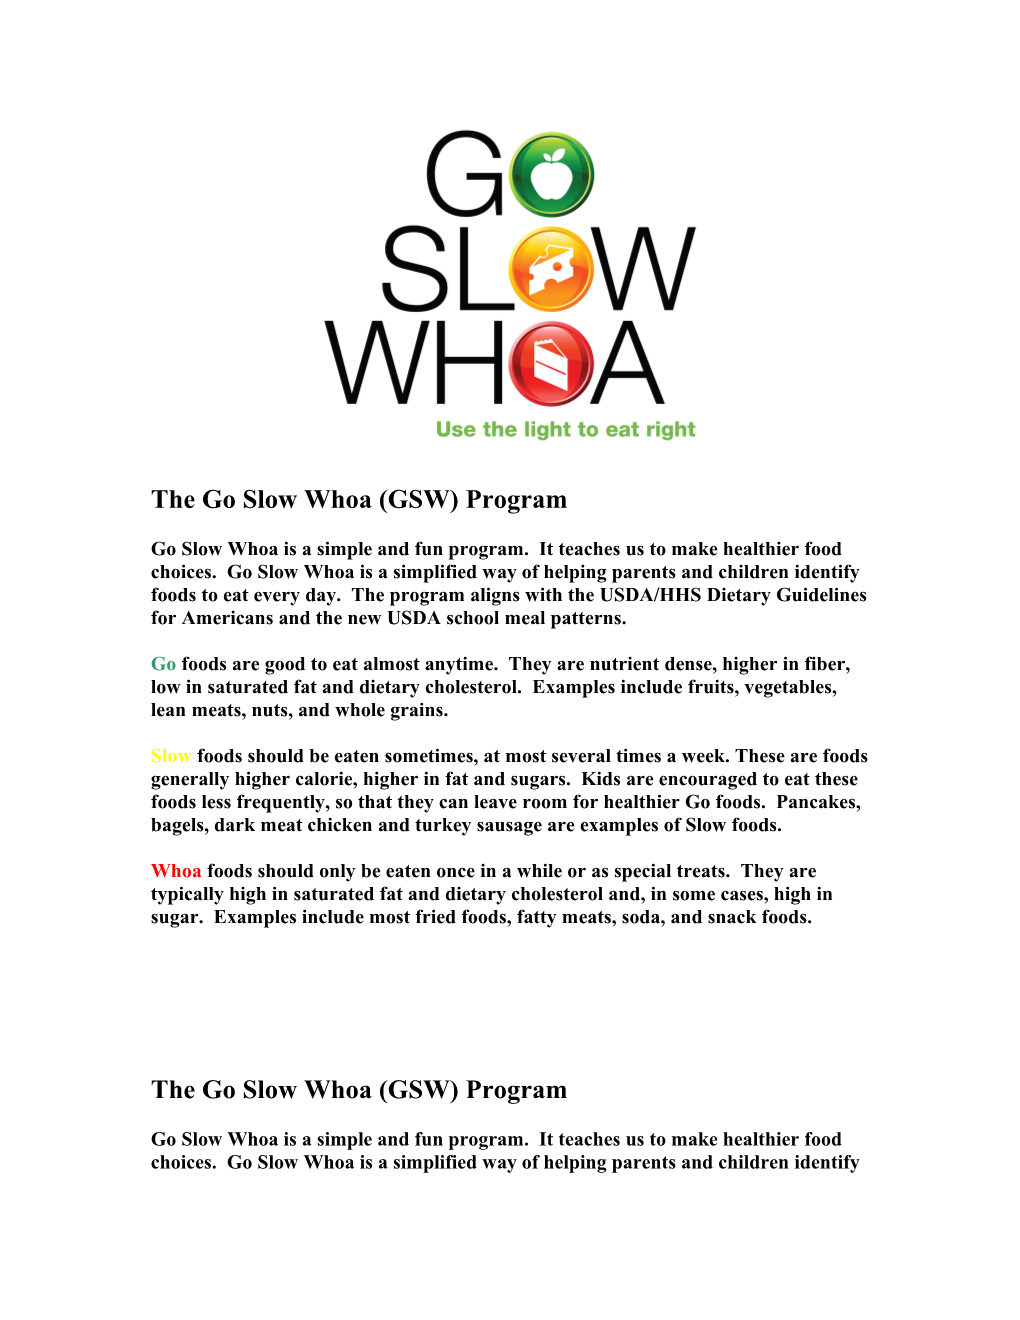 The Go Slow Whoa (GSW) Program